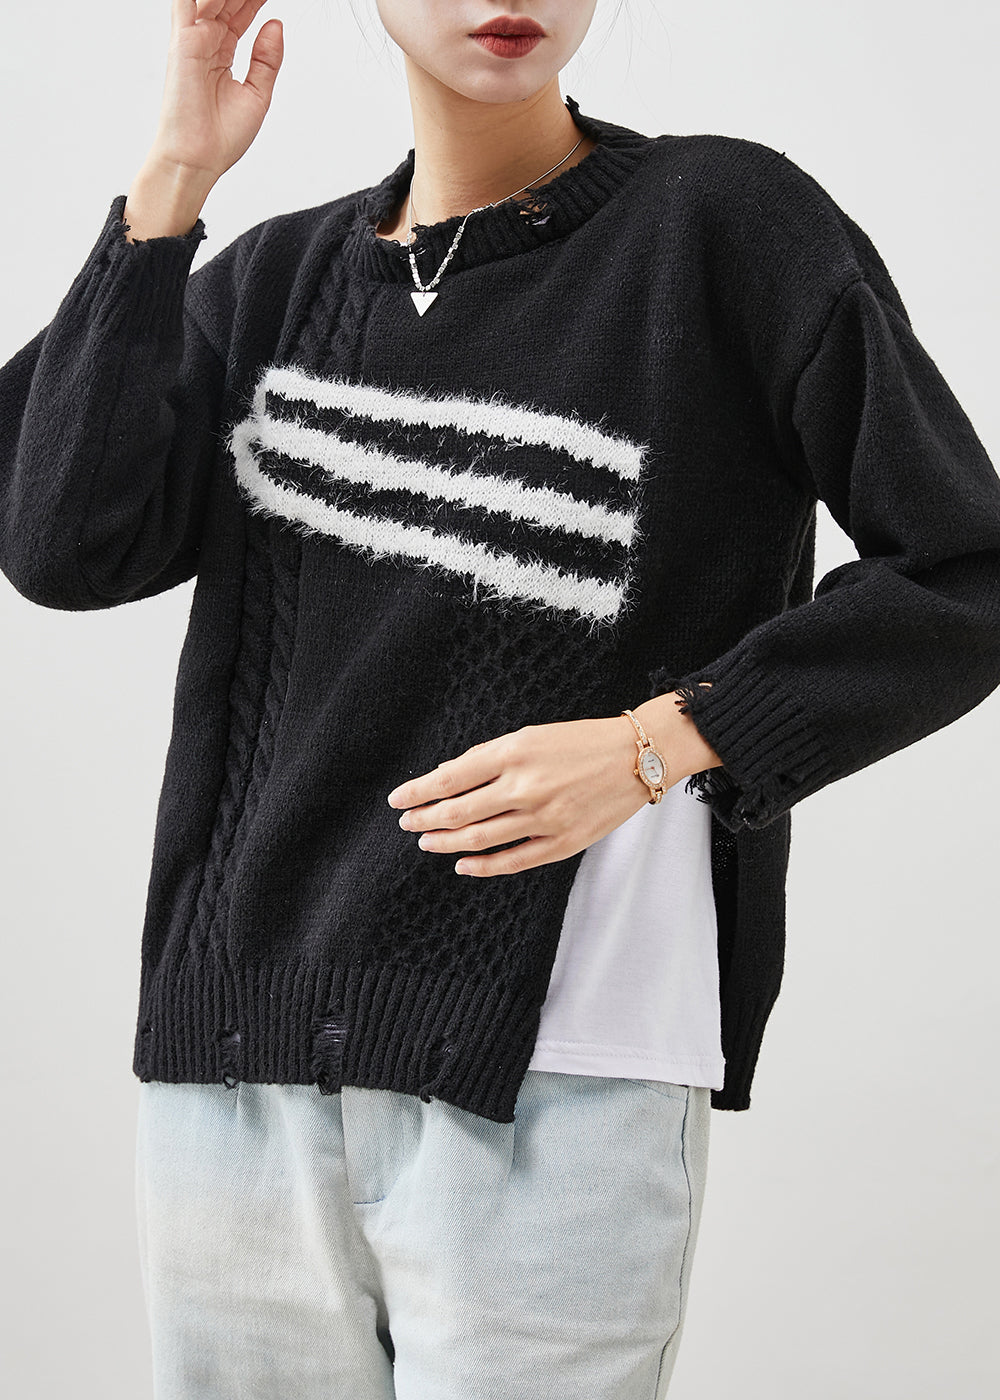 Casual Black Side Open Knit Ripped Sweaters Winter